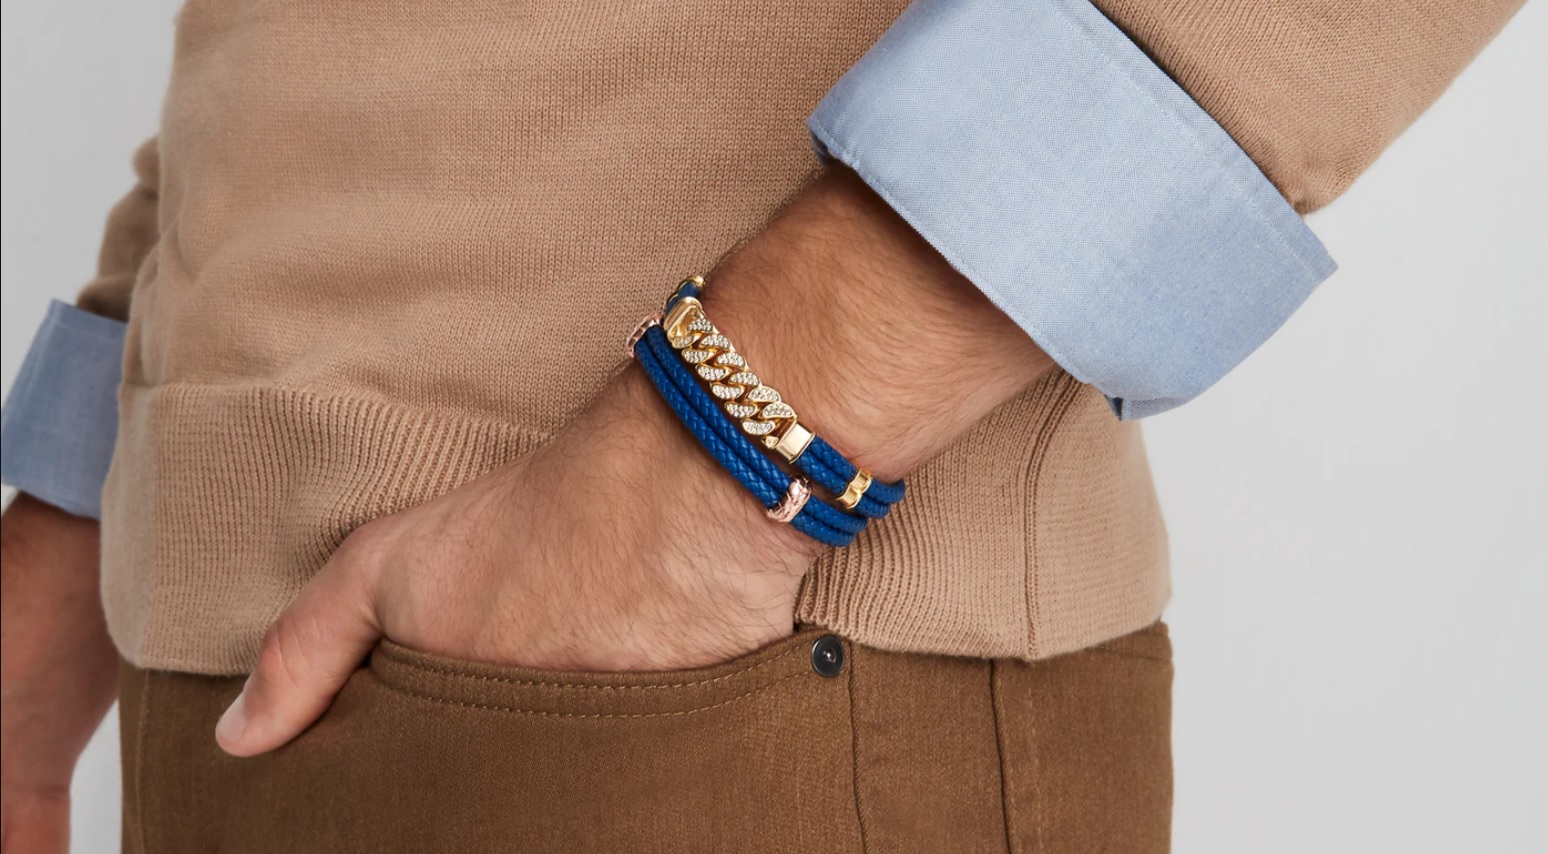 How Loose Should a Wrist Bracelet for Men Be? – LaCkore Couture